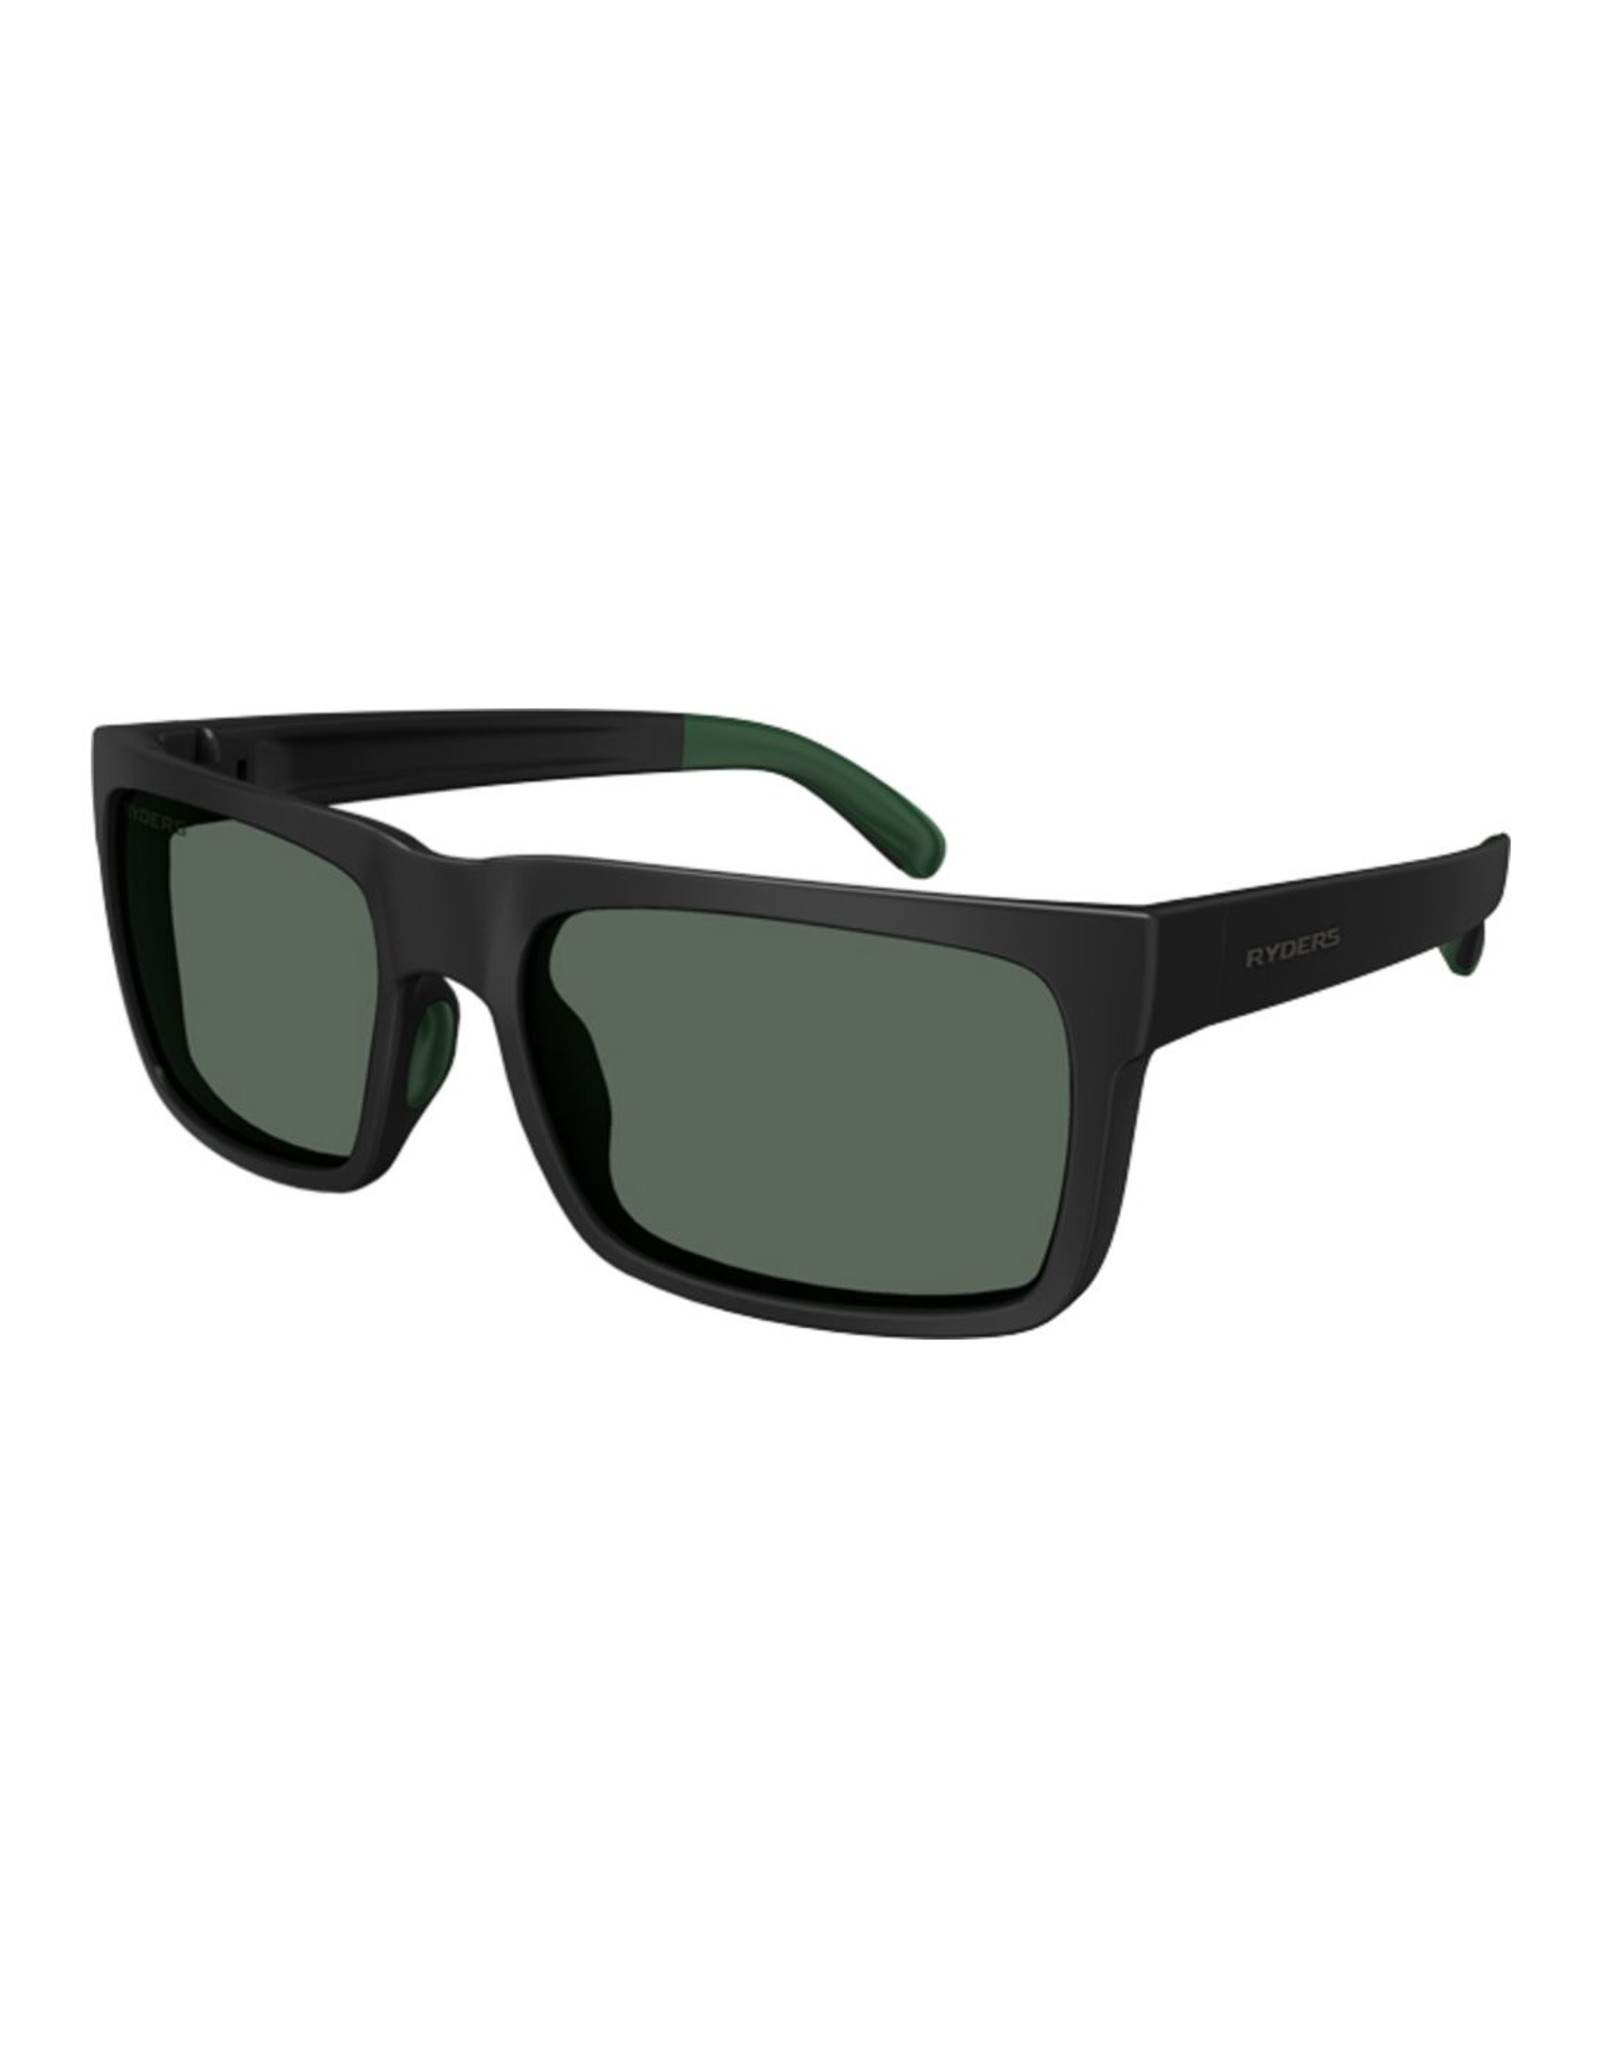 Ryder Eyewear Ryders Eyewear - Pemby CB Matte Black-Green/Green Lens AR